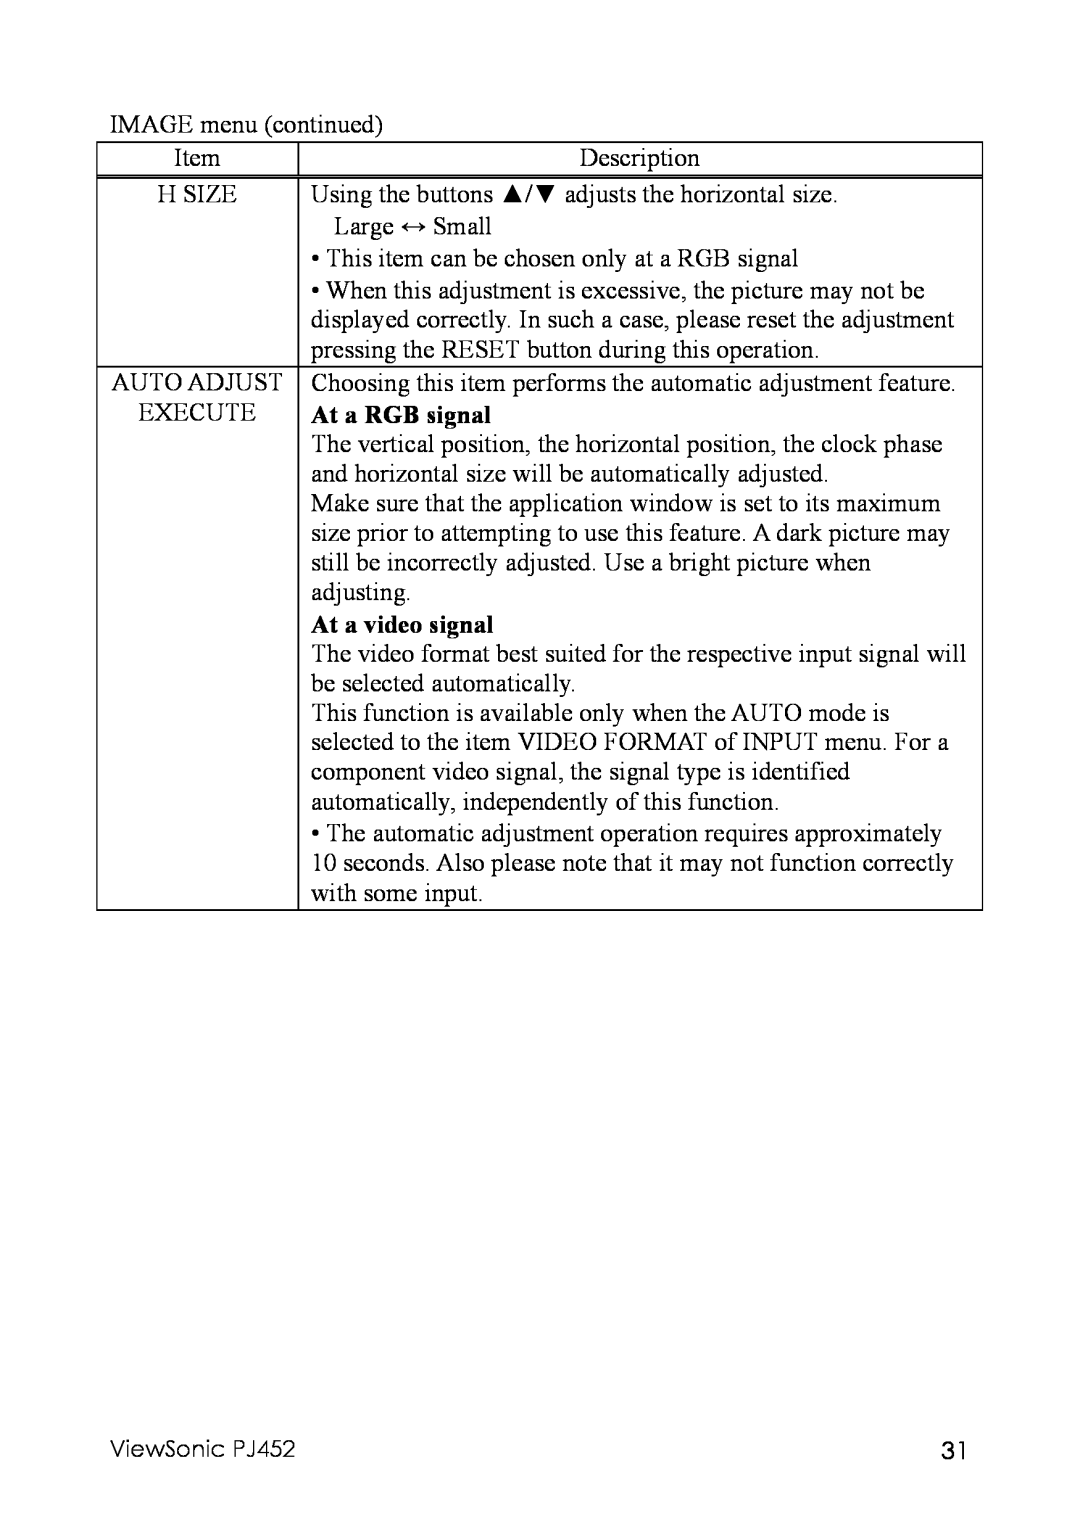 ViewSonic PJ452 manual At a RGB signal, At a video signal 